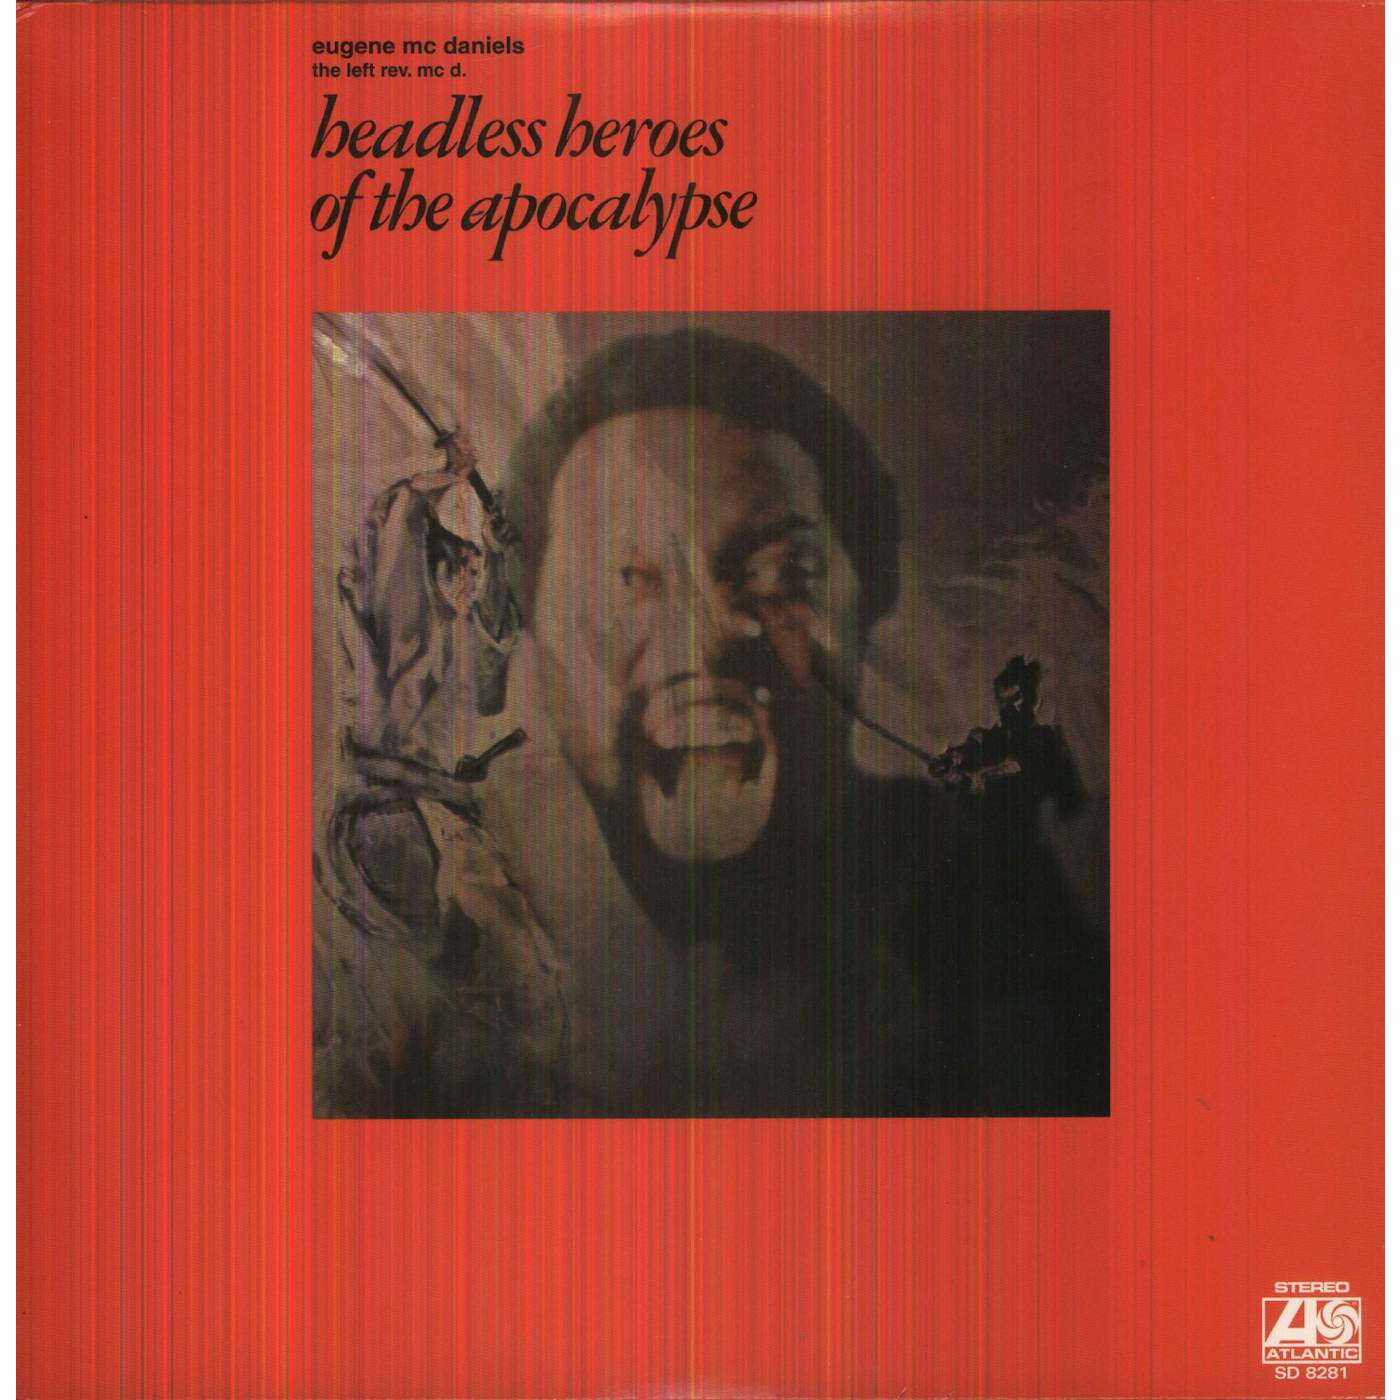 Eugene McDaniels Headless Heroes of the Apocalypse Vinyl Record